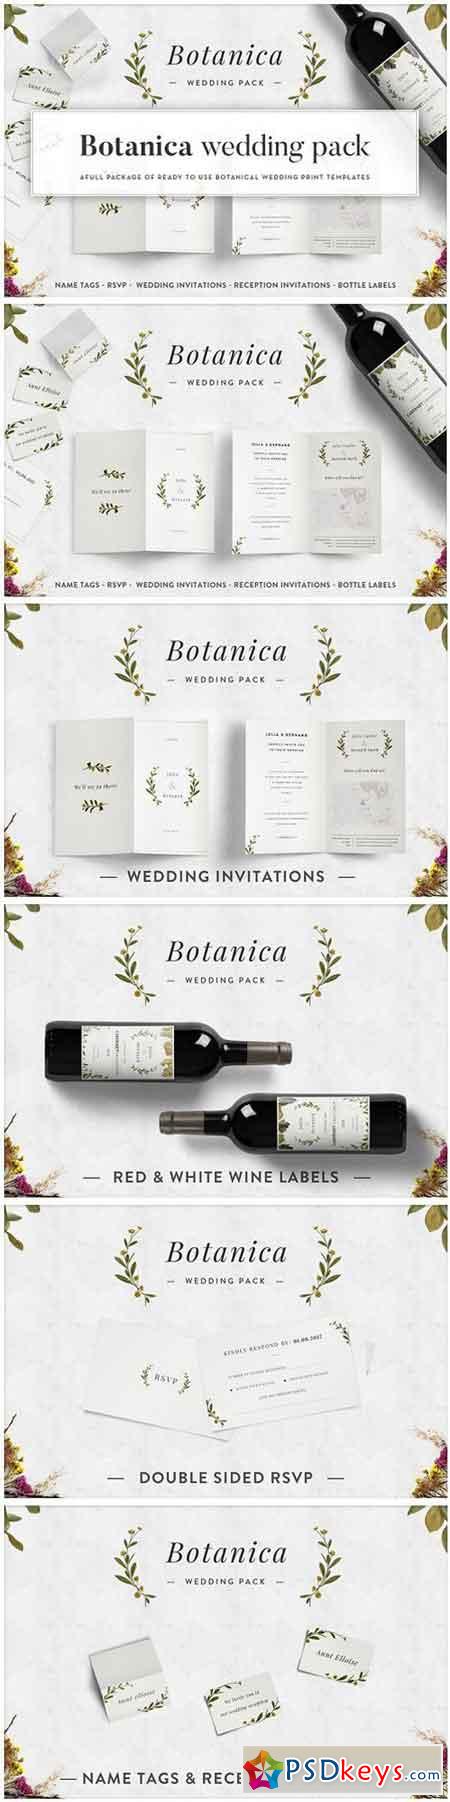 Botanica - Wedding Pack [print] 1452584